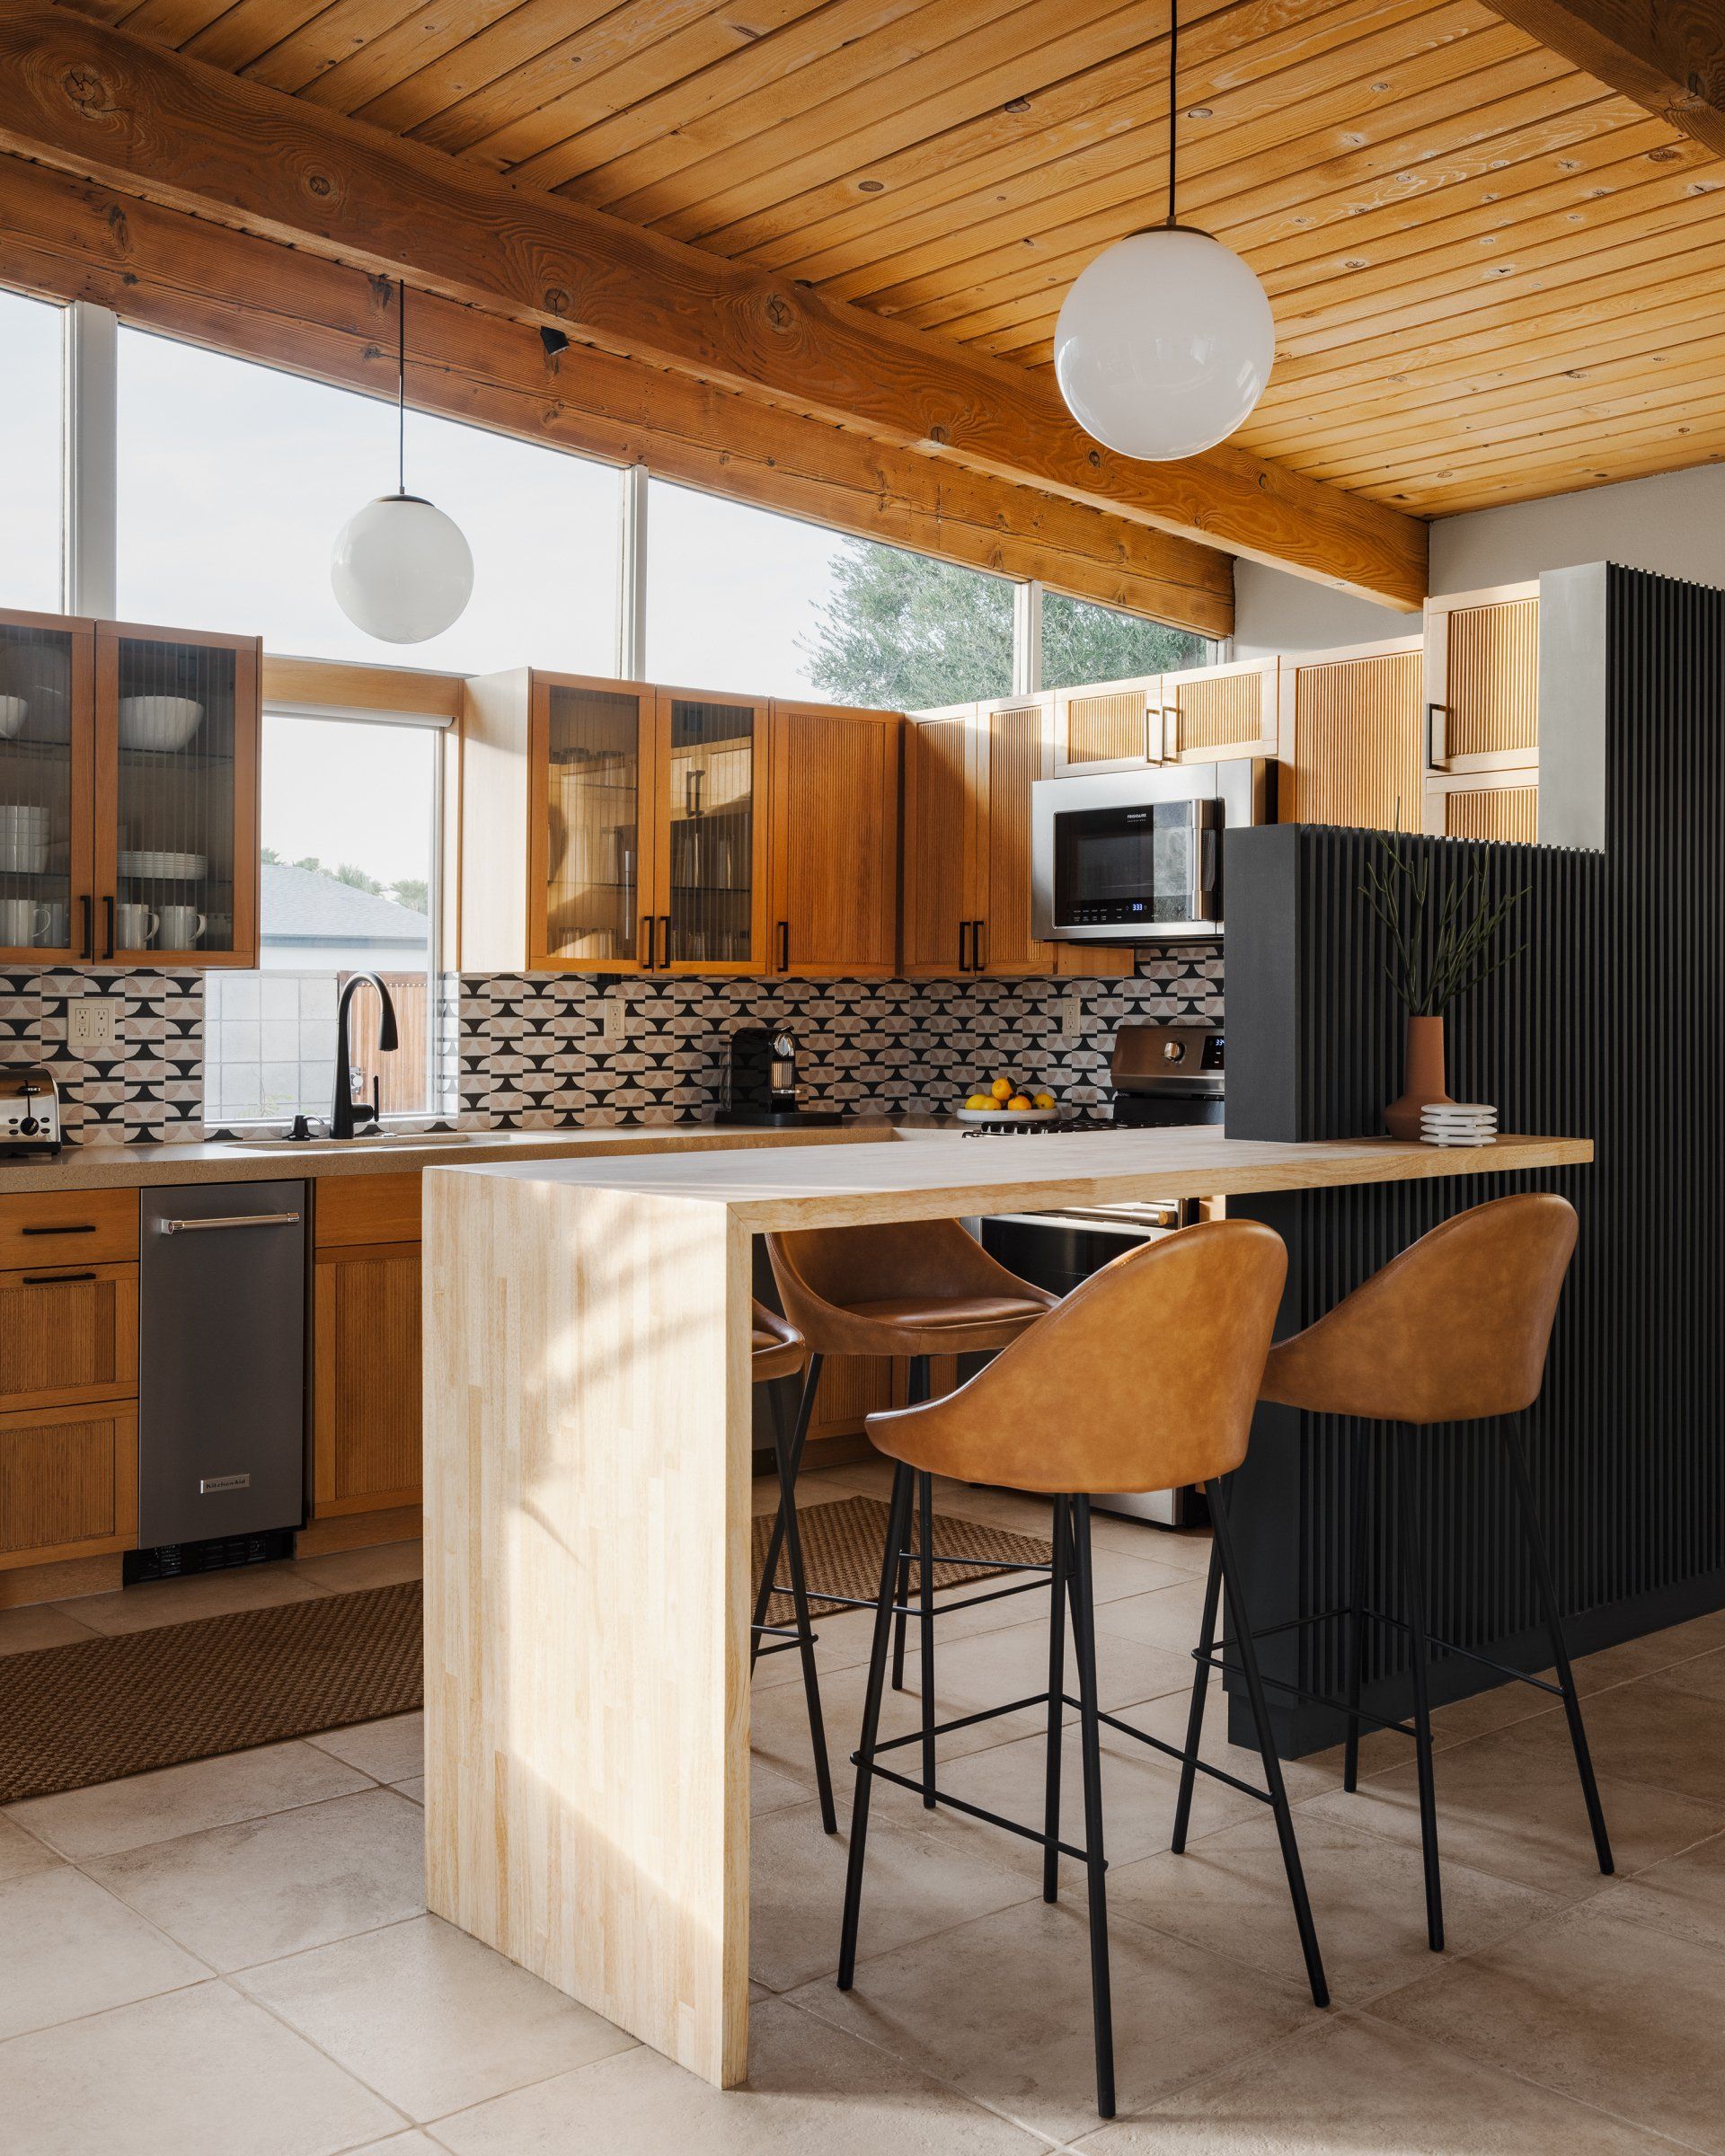 Kitchen in Palm Springs designed by Dakota DesignWorks